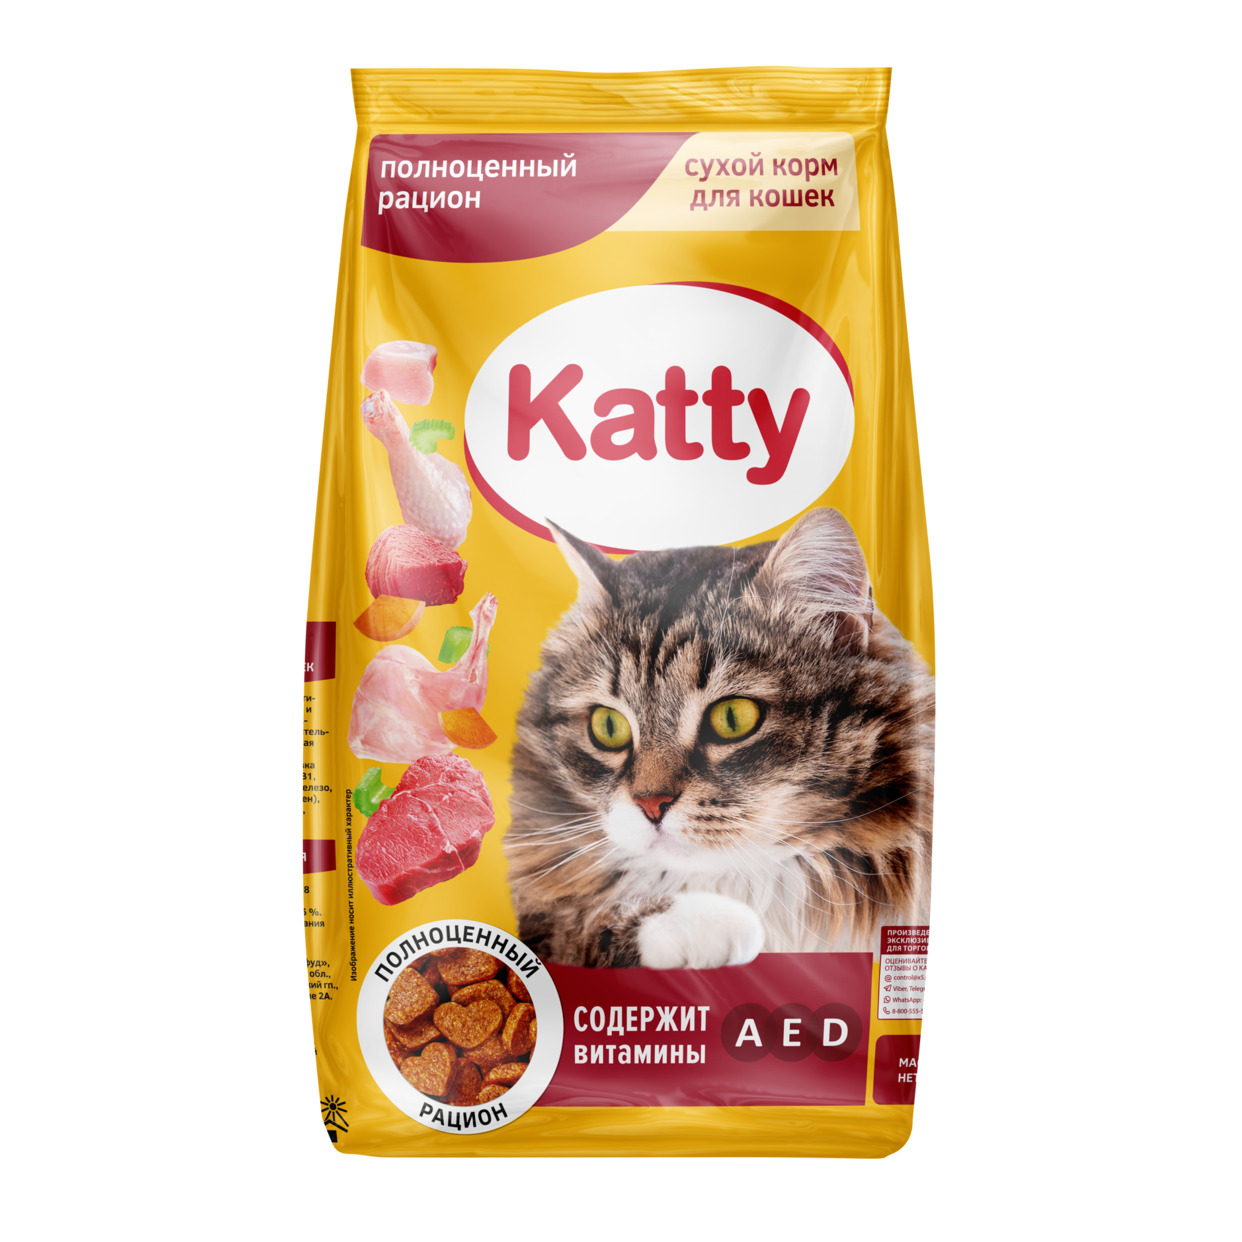 Katty корм сухой для взрослых кошек , пп, 350 г